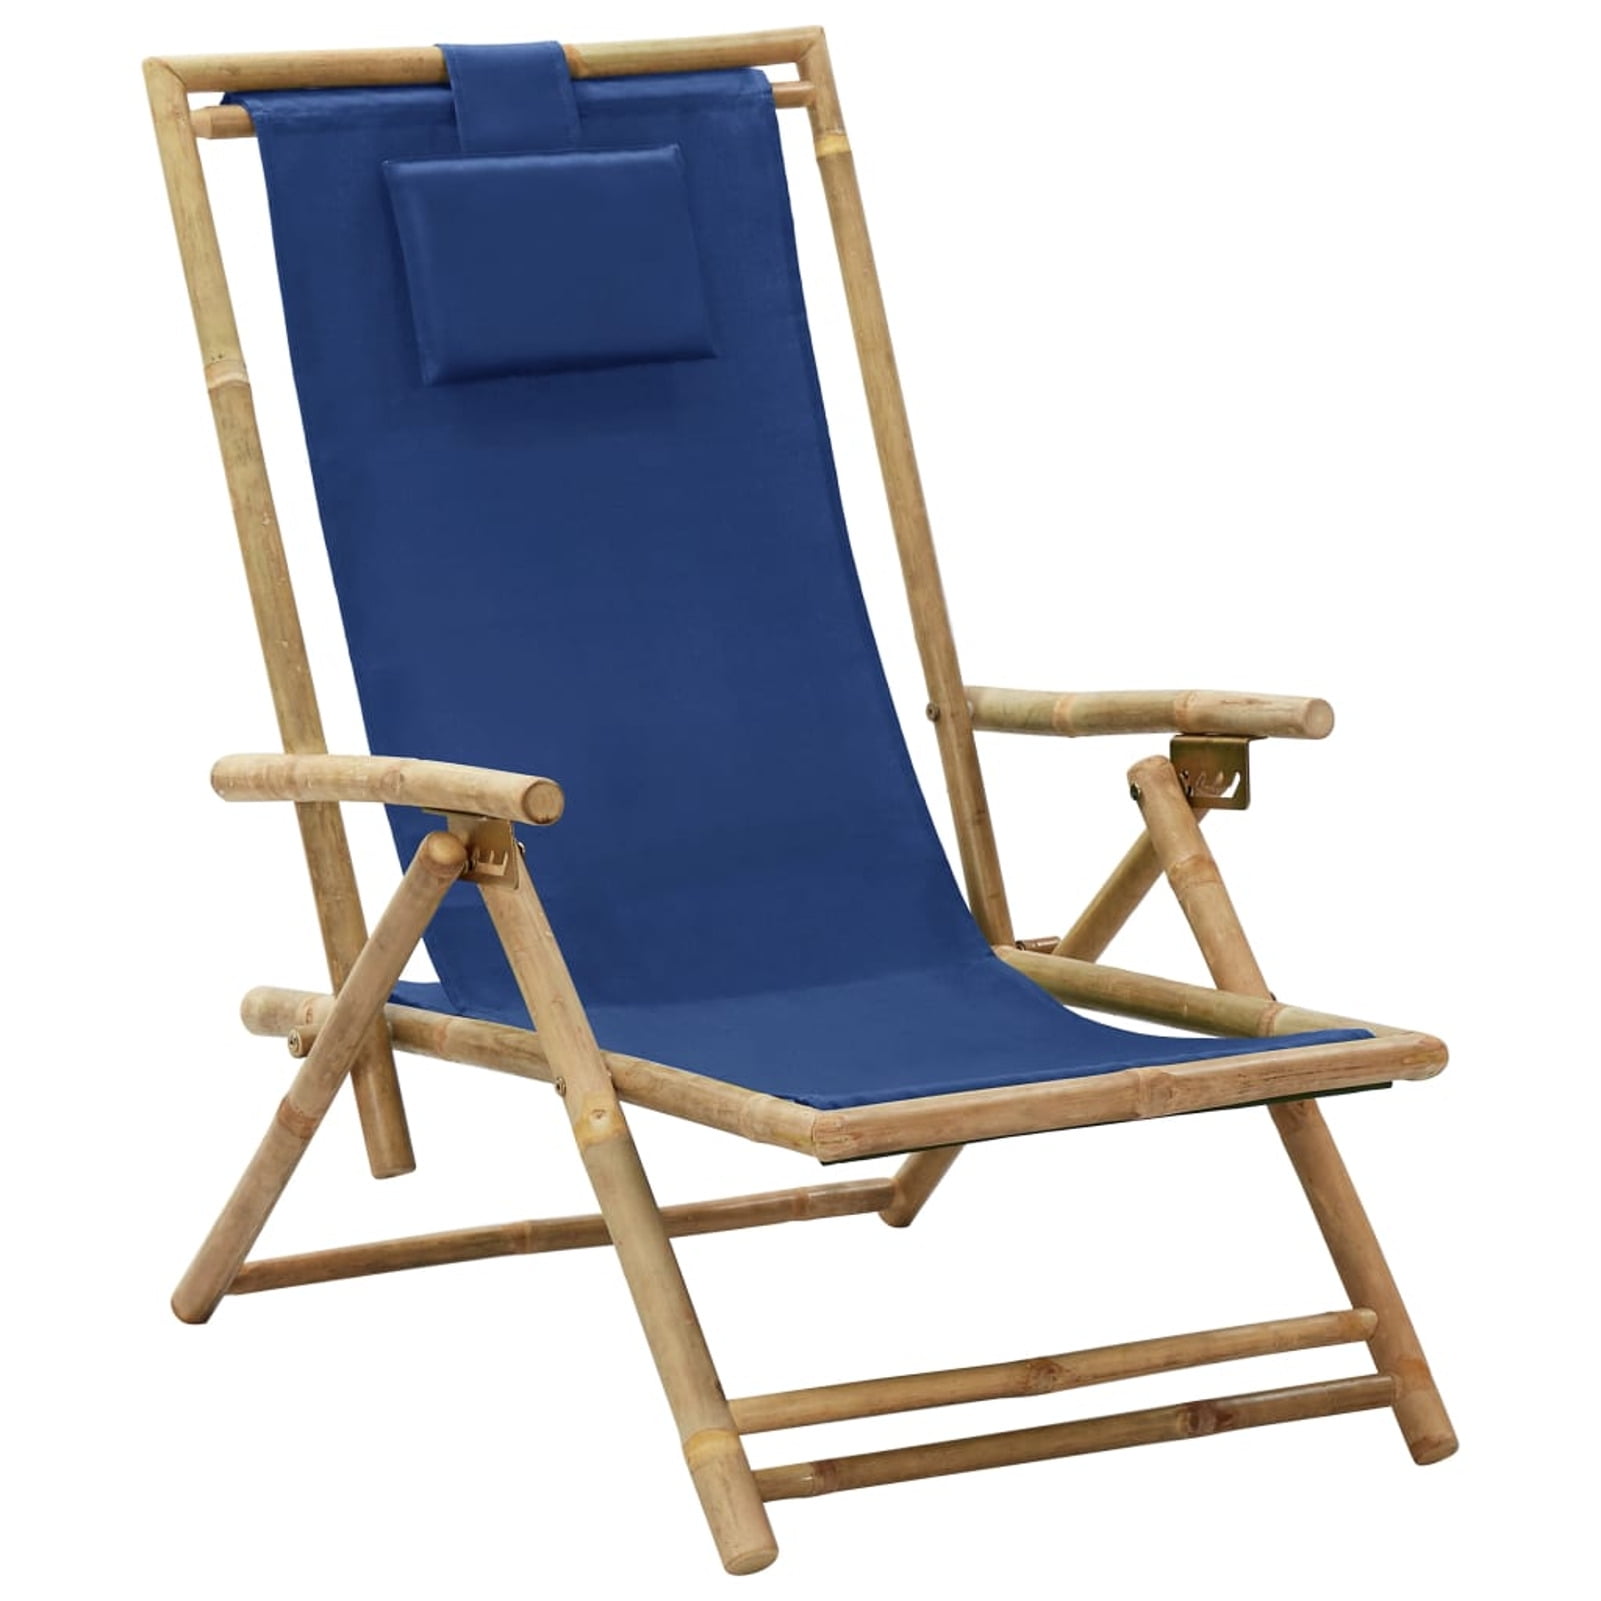 Details about   Bamboo Deck Chair Sun Lounger Recliner Outdoor Garden Patio Furniture Foldable 